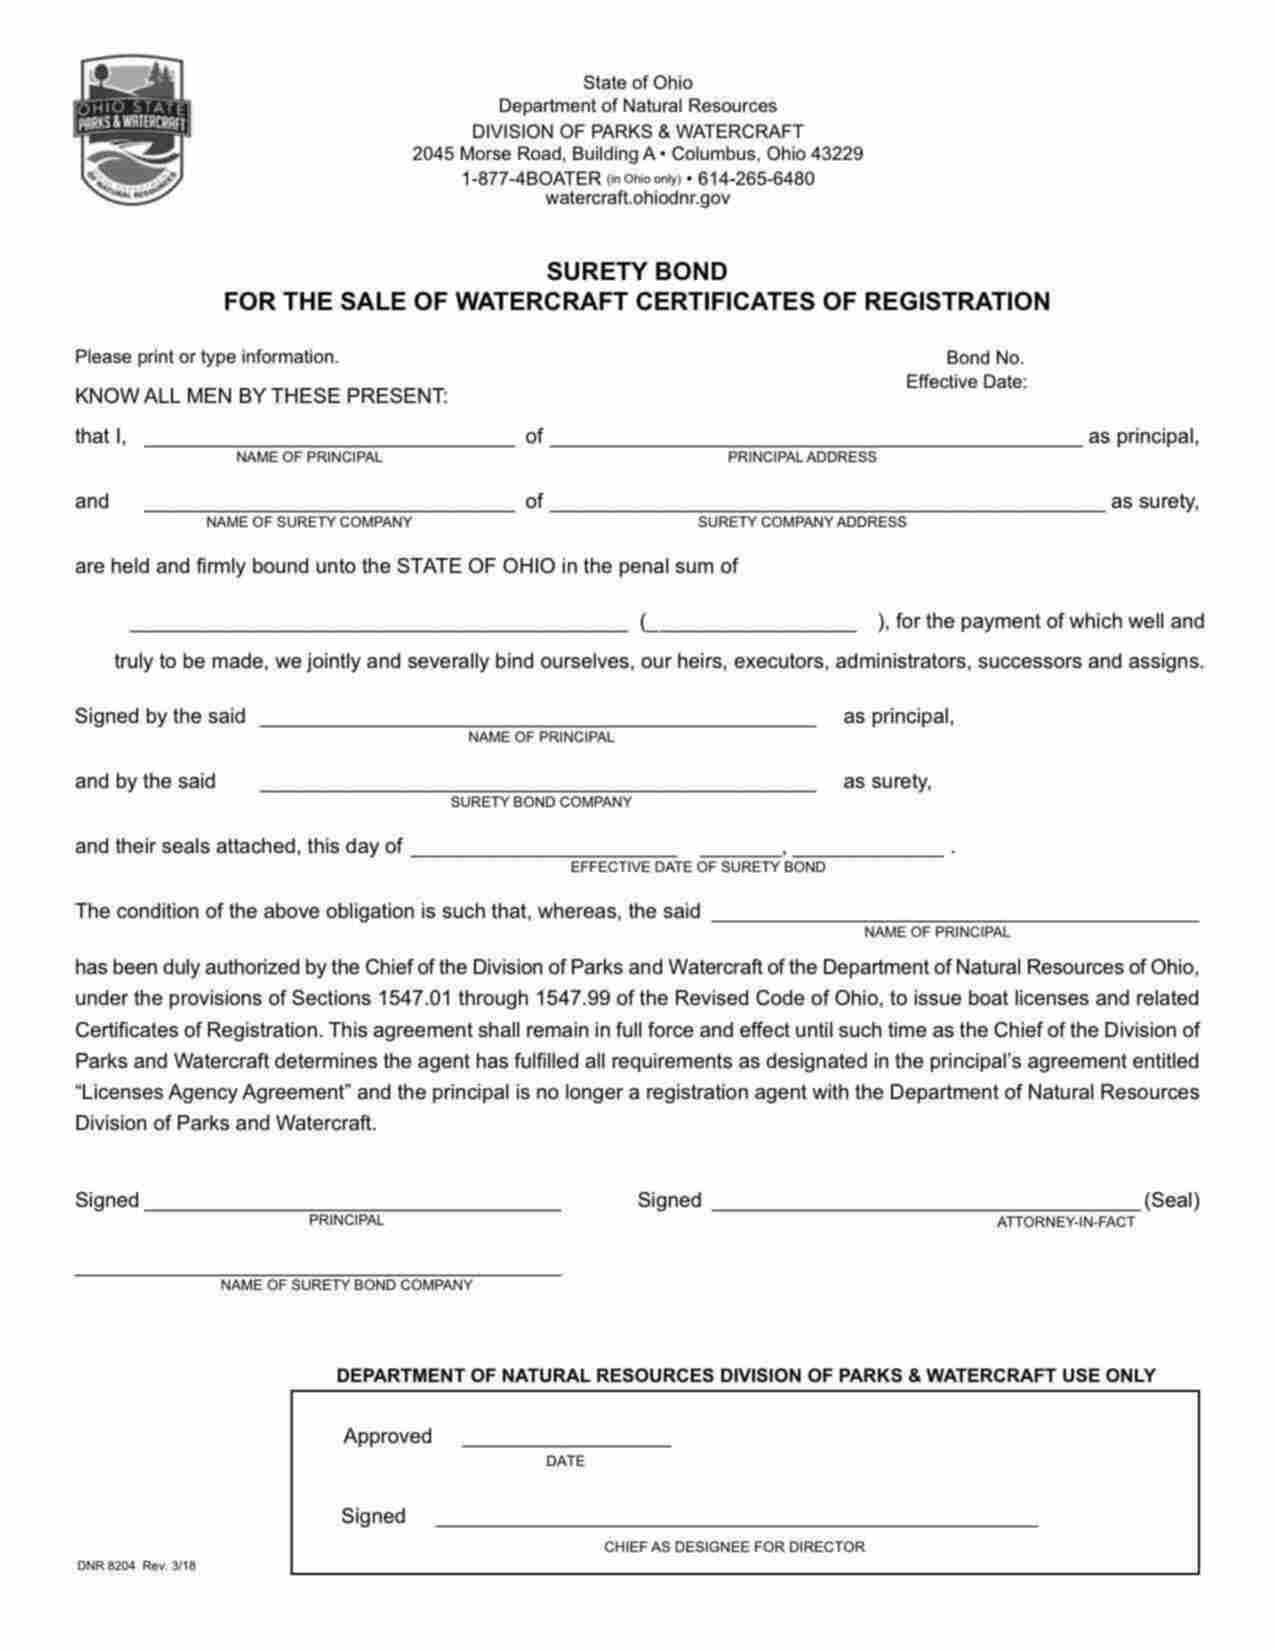 Ohio Sale of Watercraft Certificates of Registration Bond Form